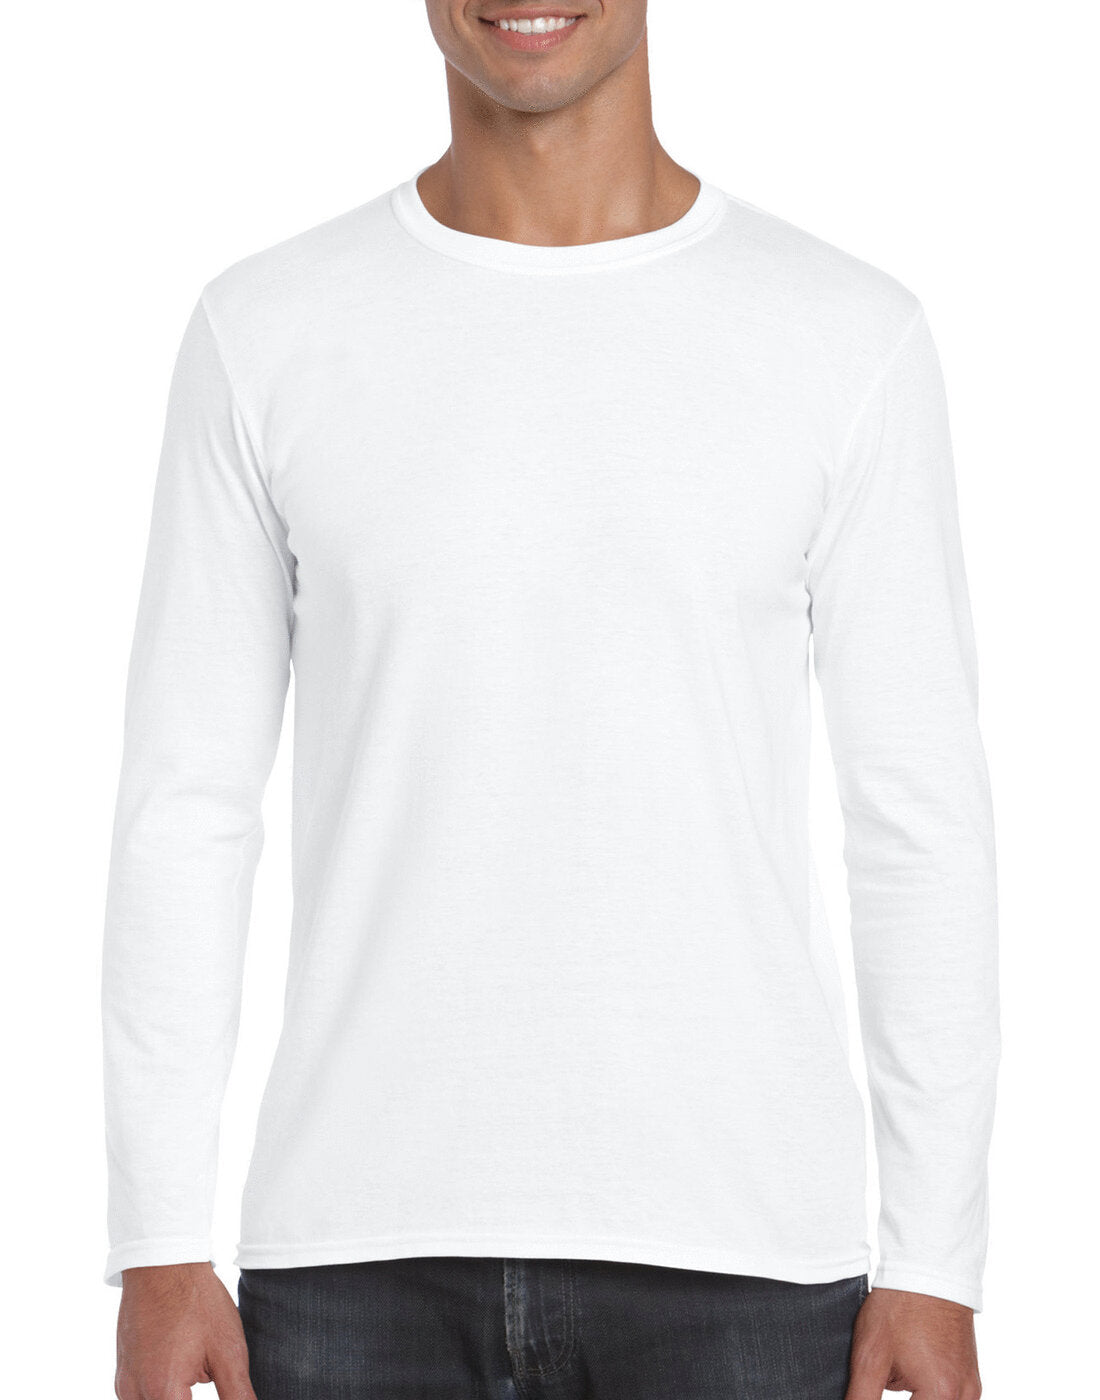 Gildan Soft Style Adult Long Sleeve T-Shirt - White